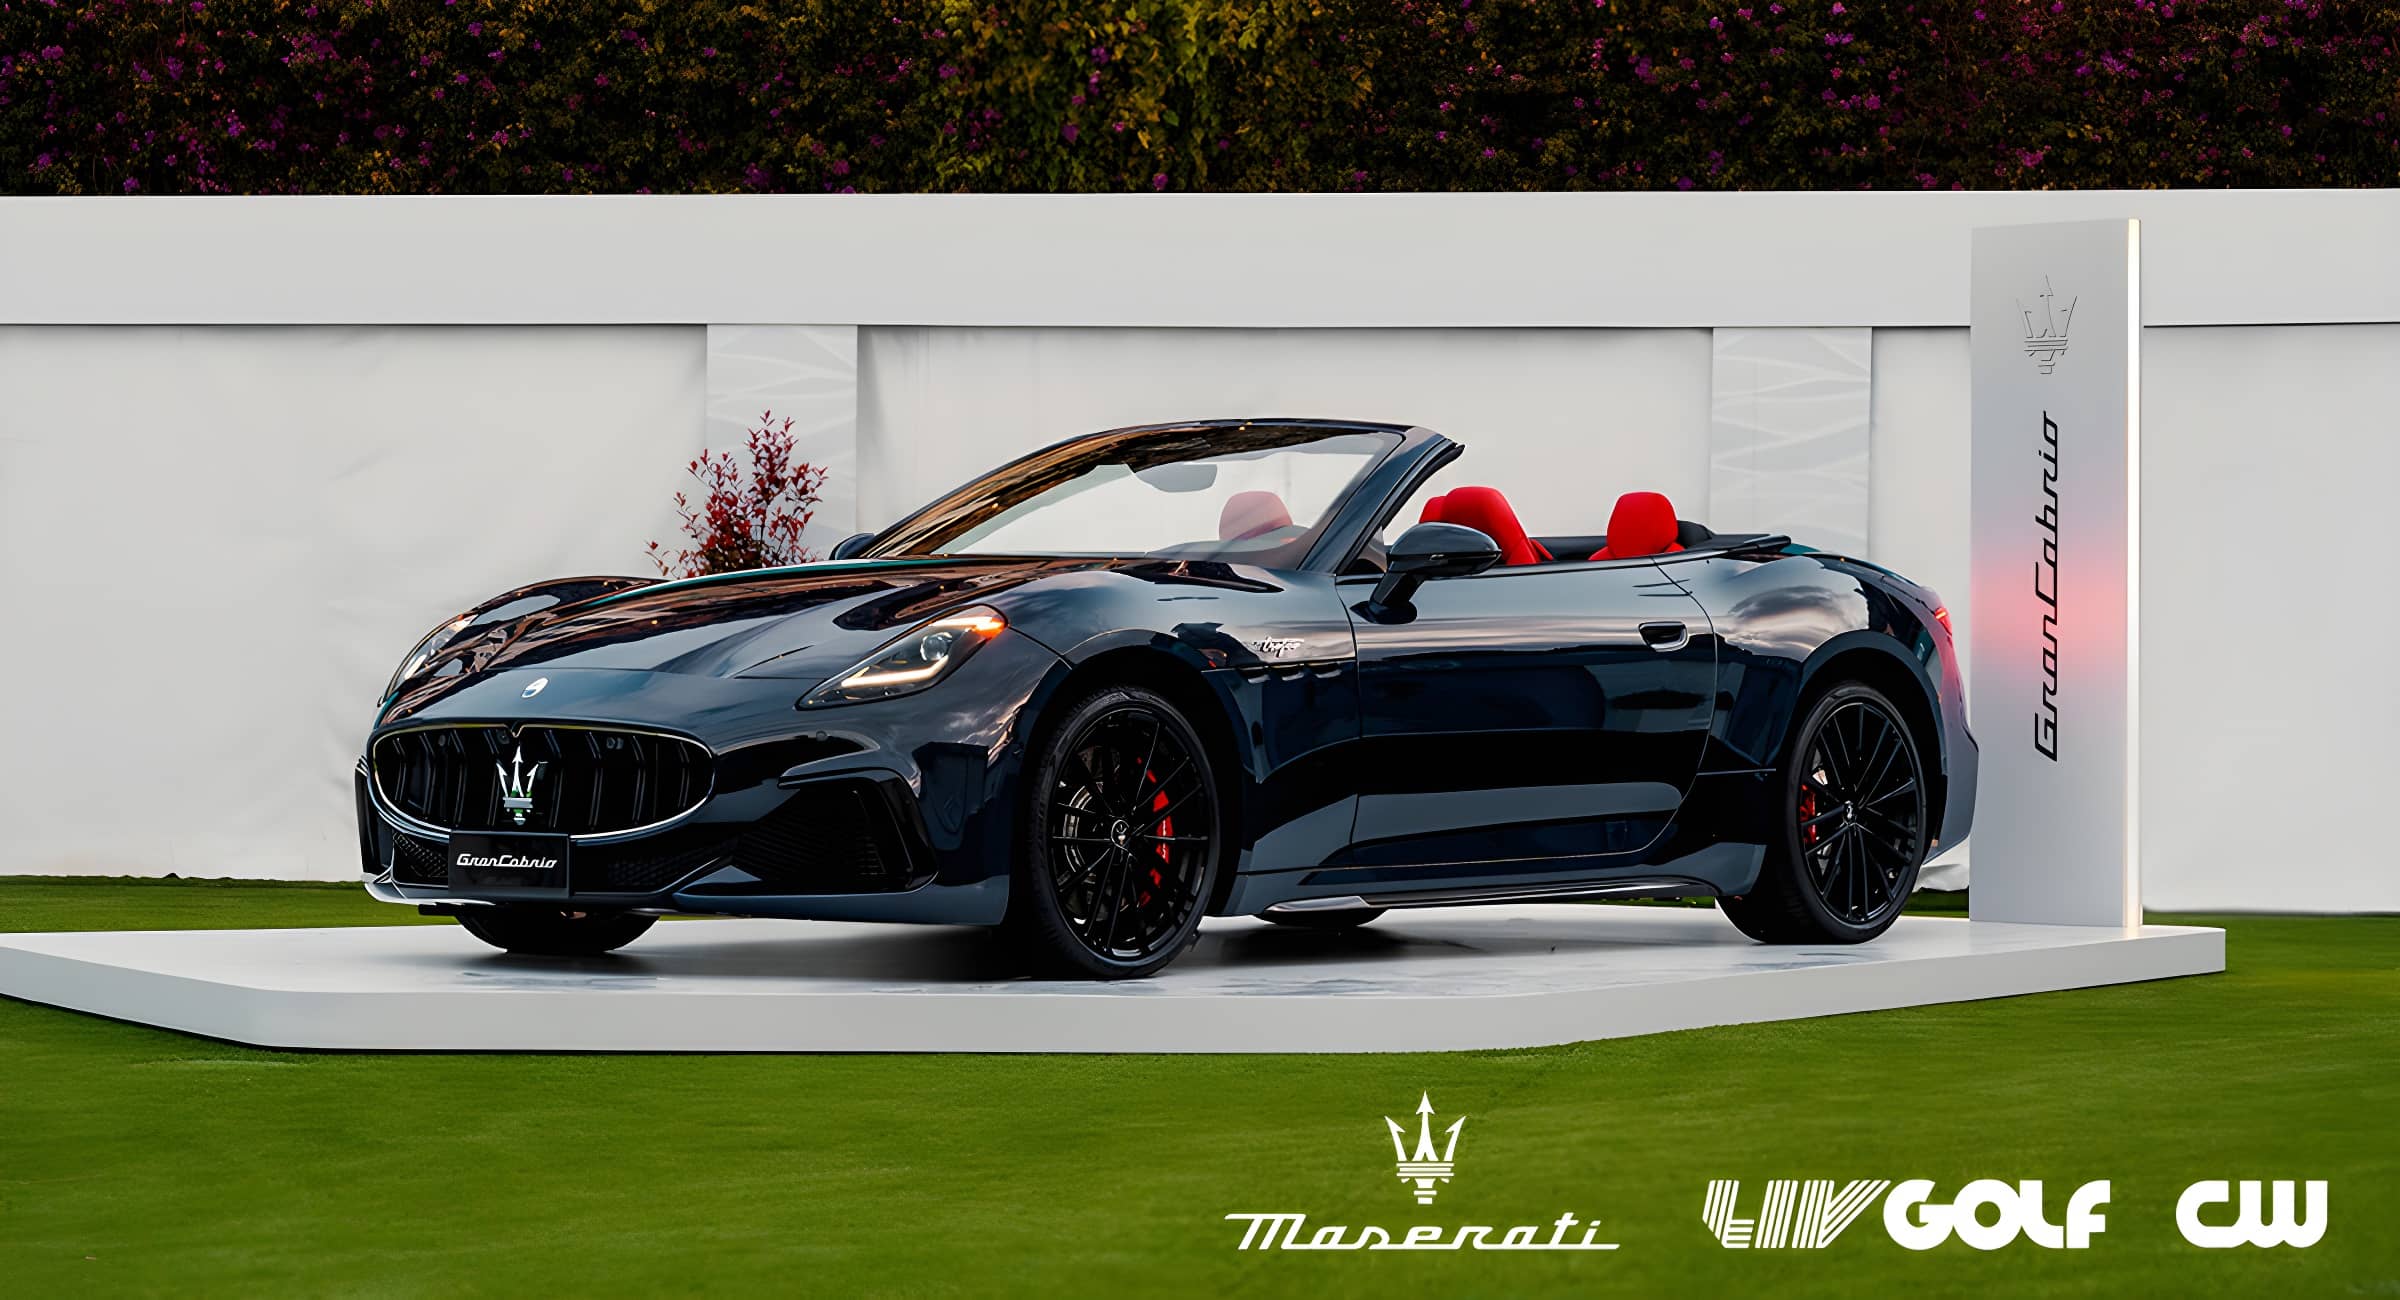 Maserati prize car on LIV Golf Event par 3